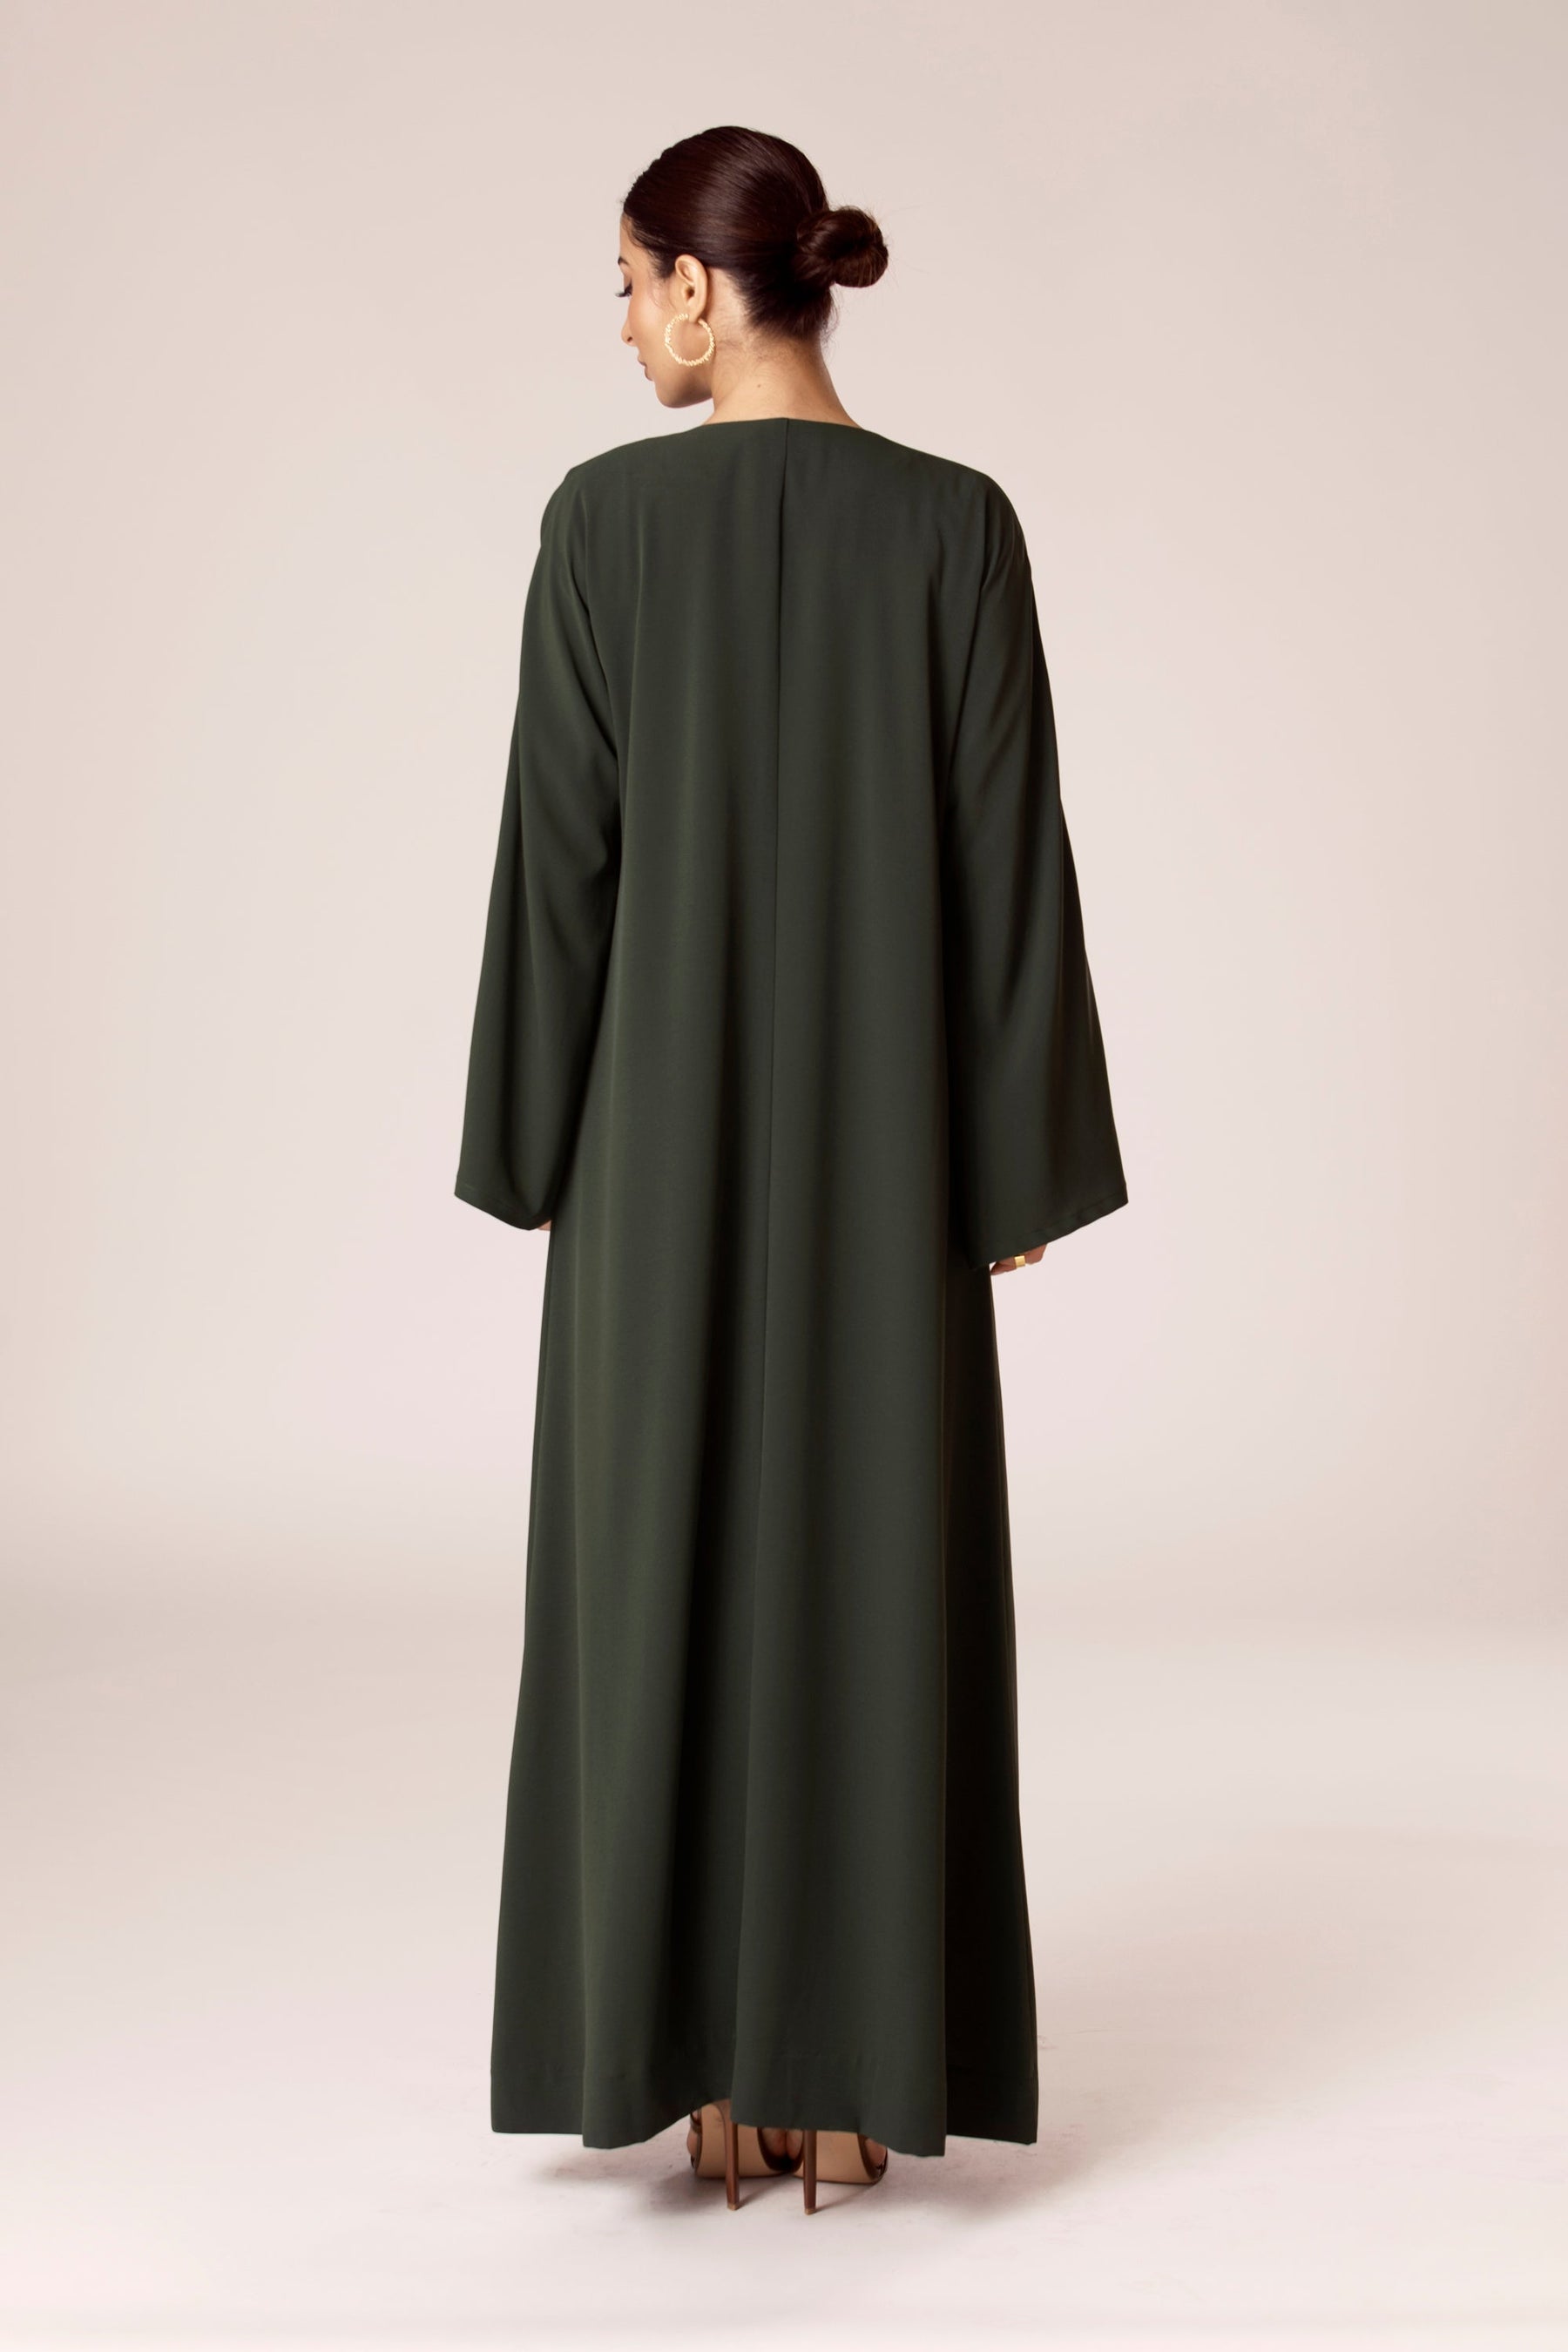 Isabella Open Abaya - Dark Emerald Veiled Collection 